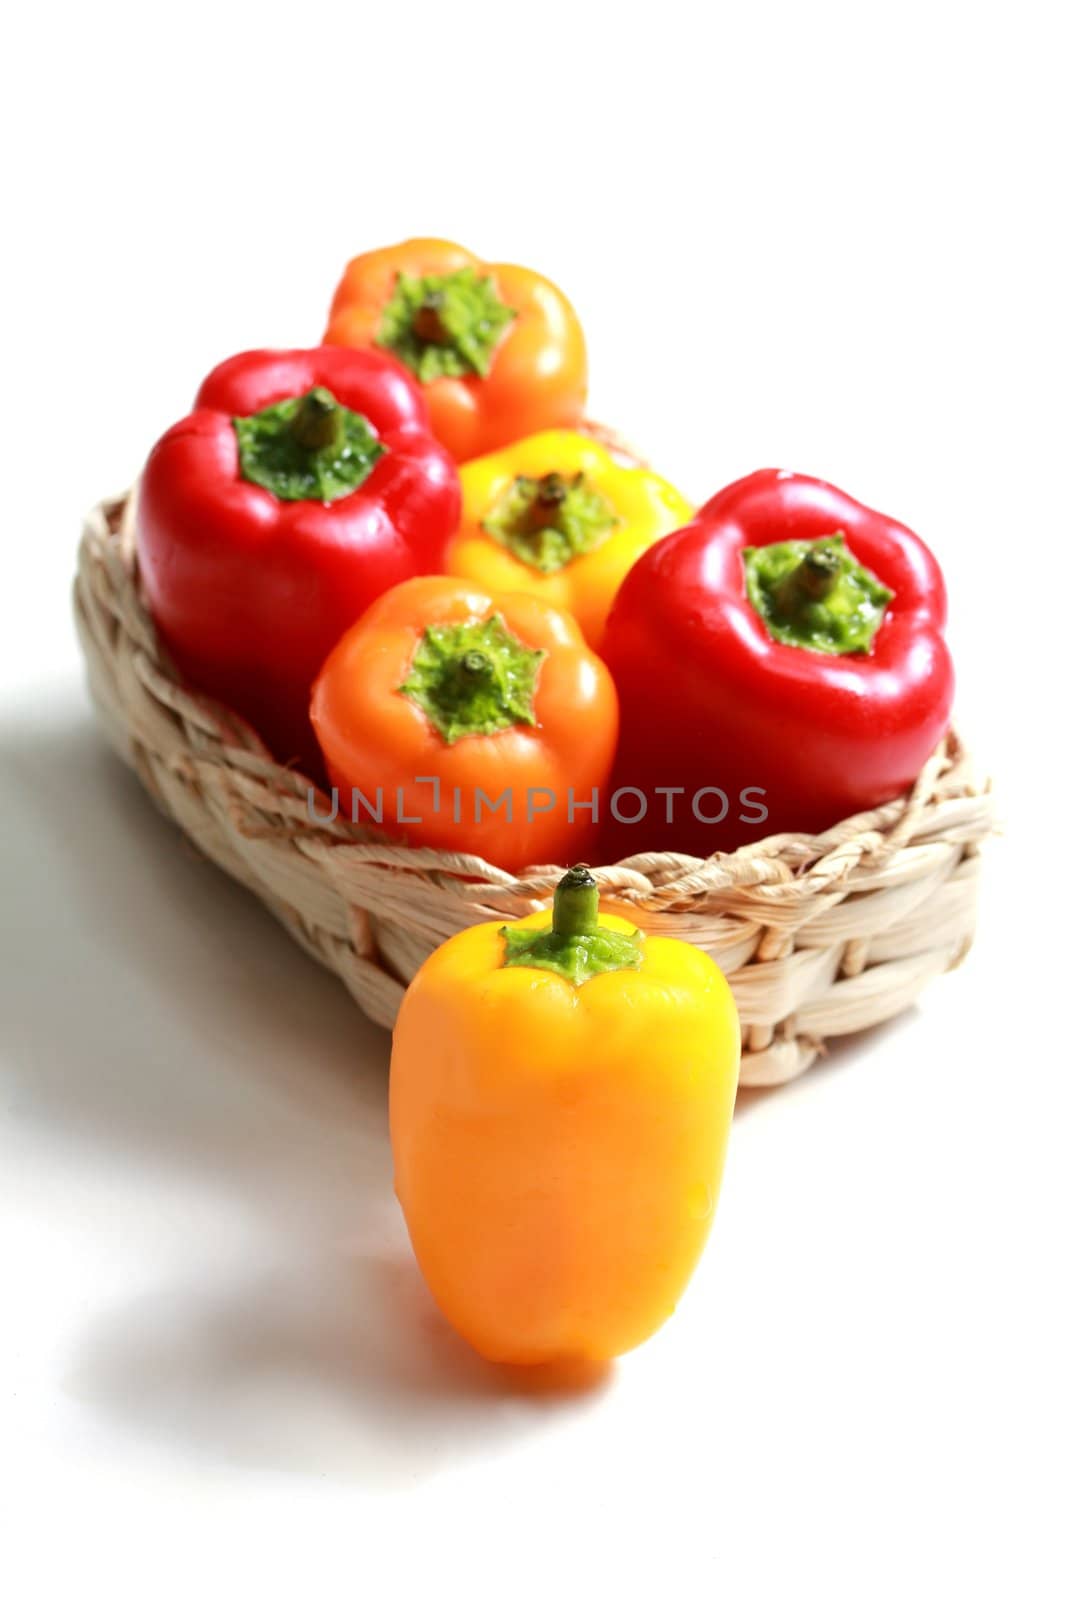 colorful mini paprika in a woven basket by Teka77